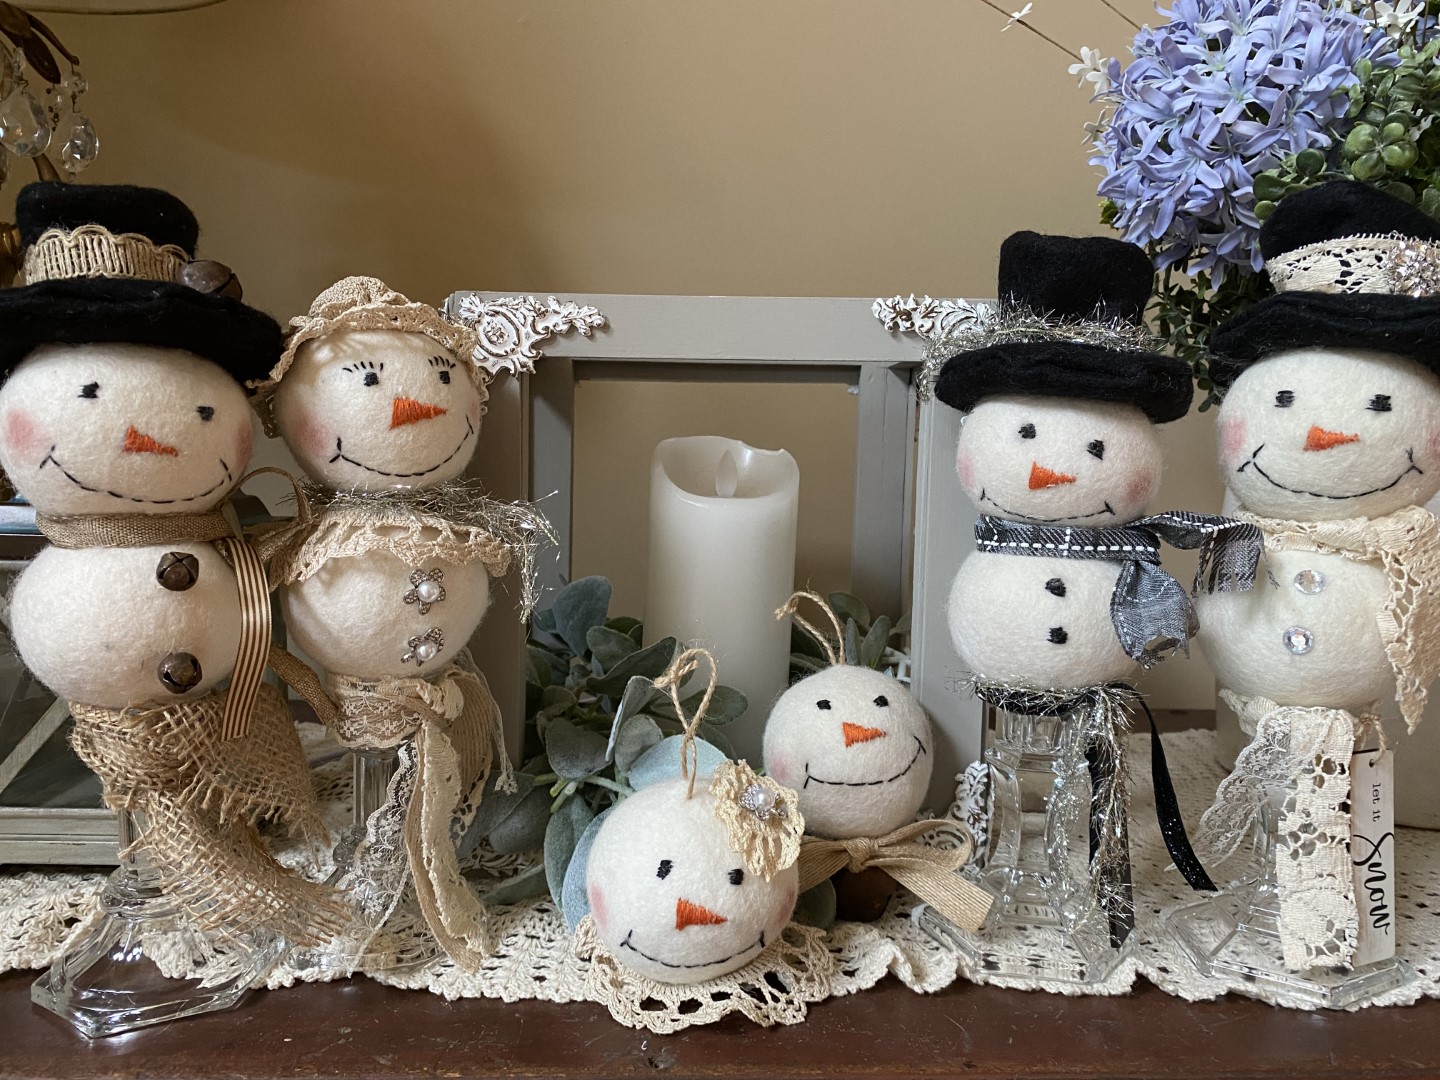 DIY Wool Dryer Ball Snowmen - The Crafty Decorator